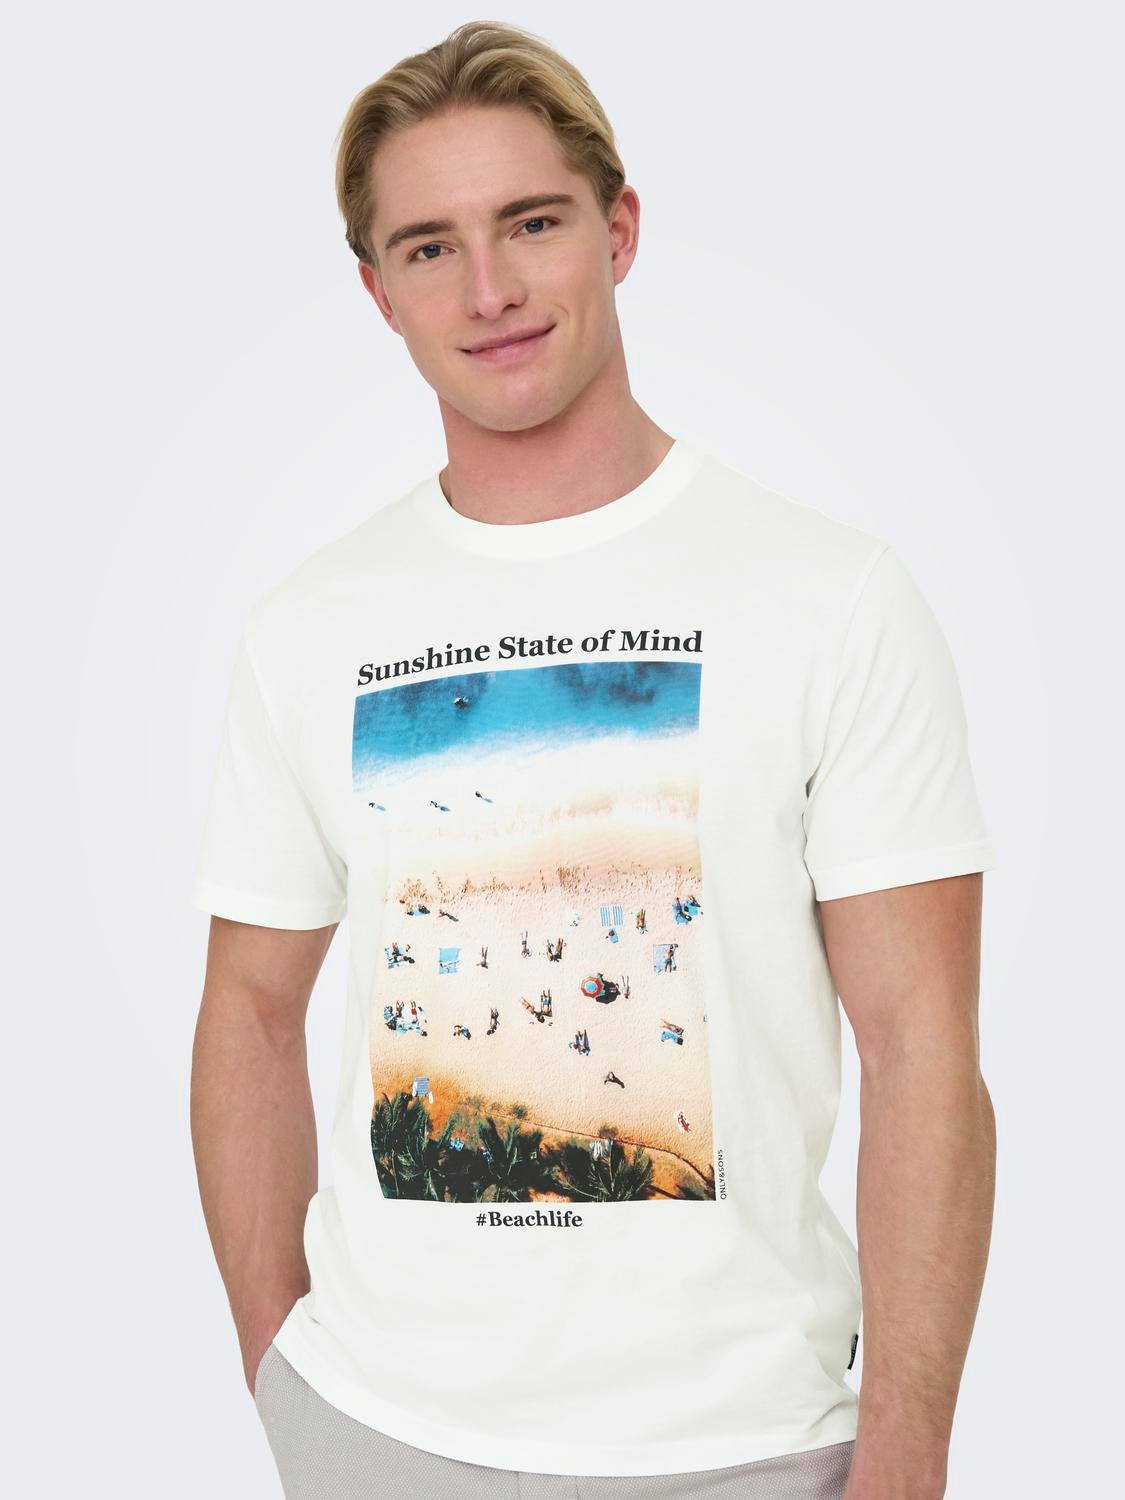 ONLY & SONS Camisetas Corte regular Cuello redondo -Cloud Dancer - 22028735